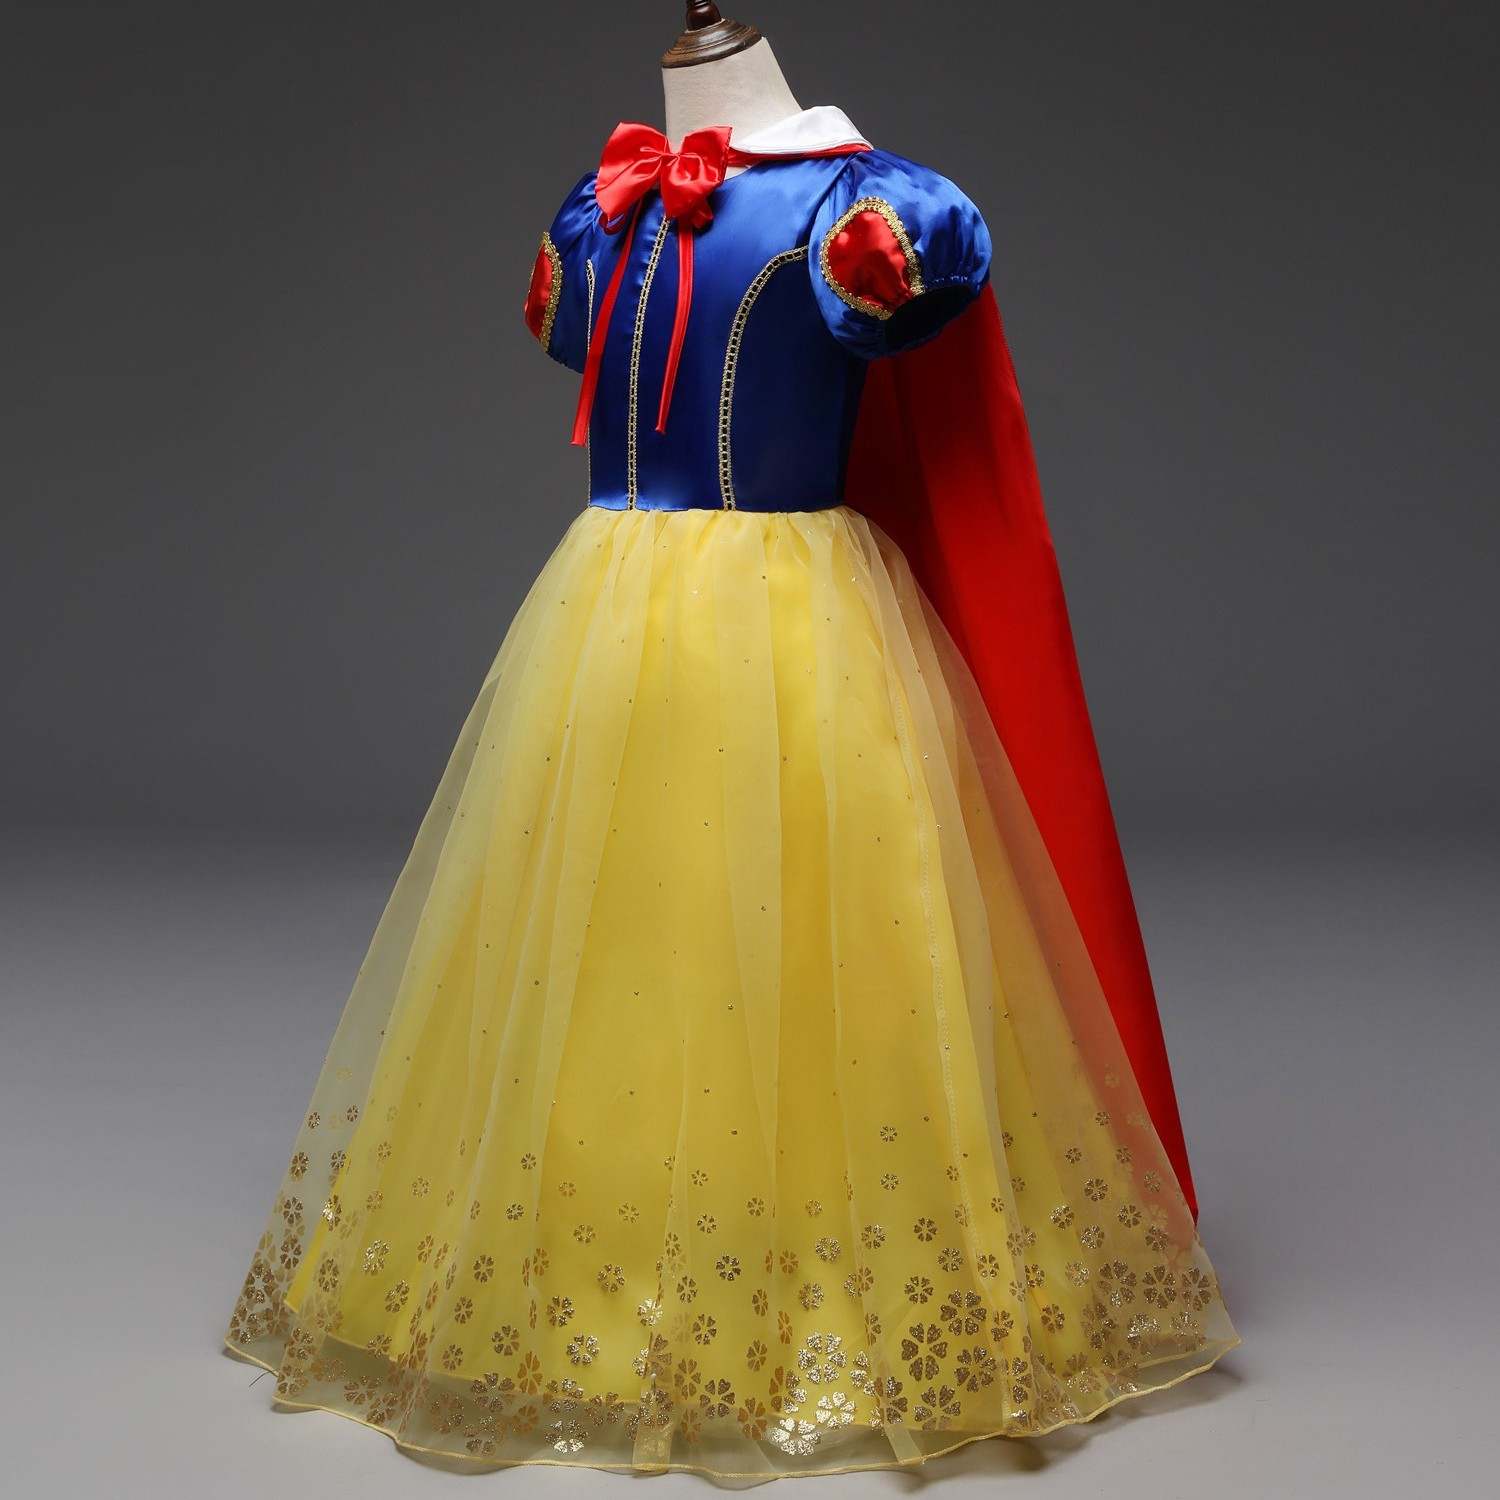 Snow White Fairytale Princess Costume